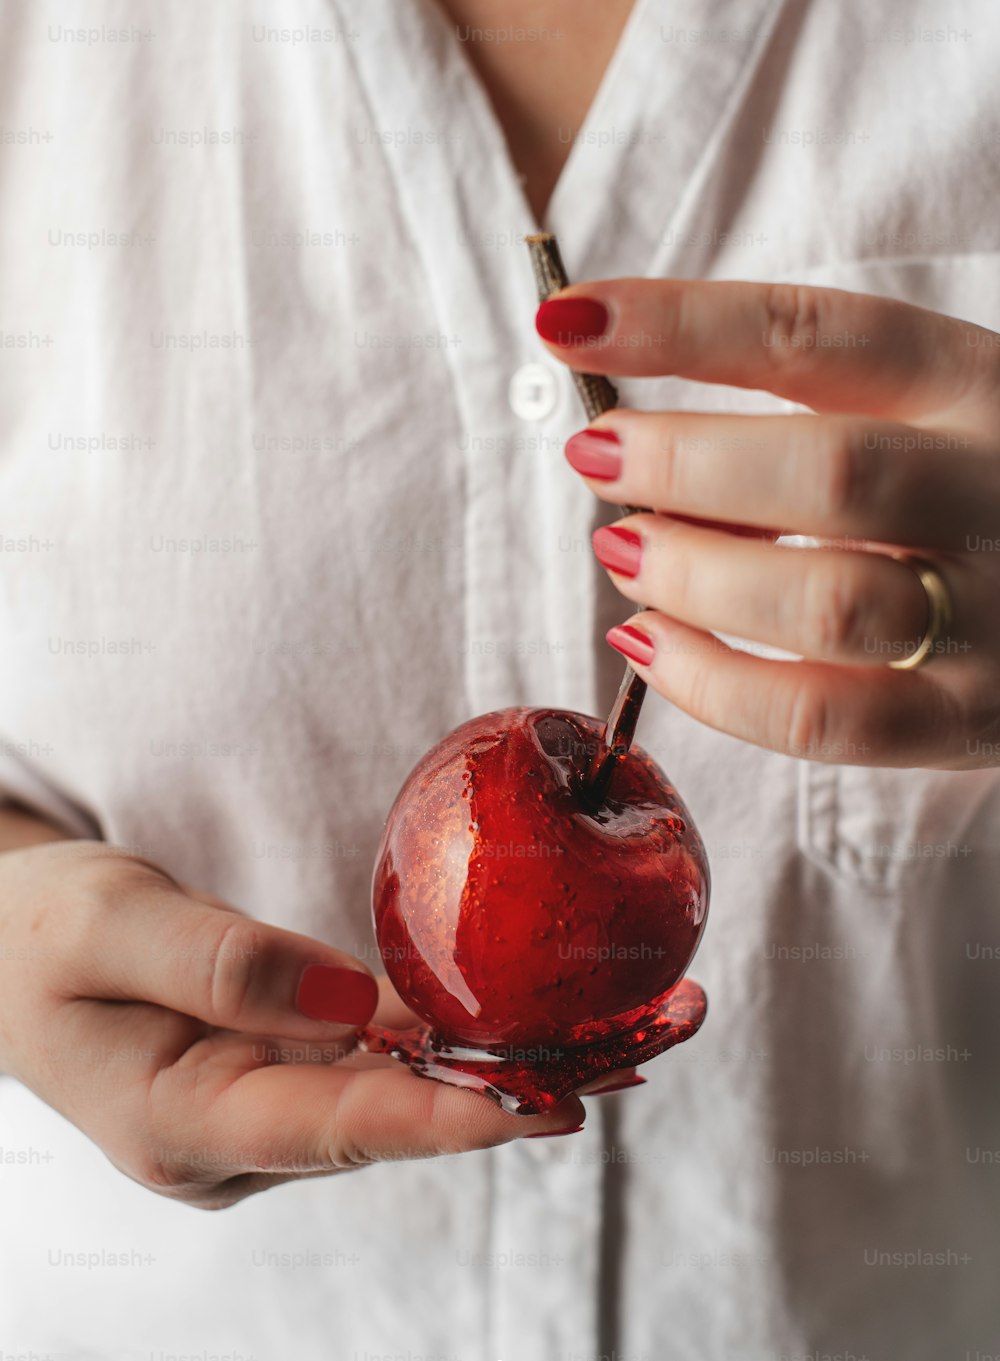 una donna che tiene in mano una mela con un morso tolto